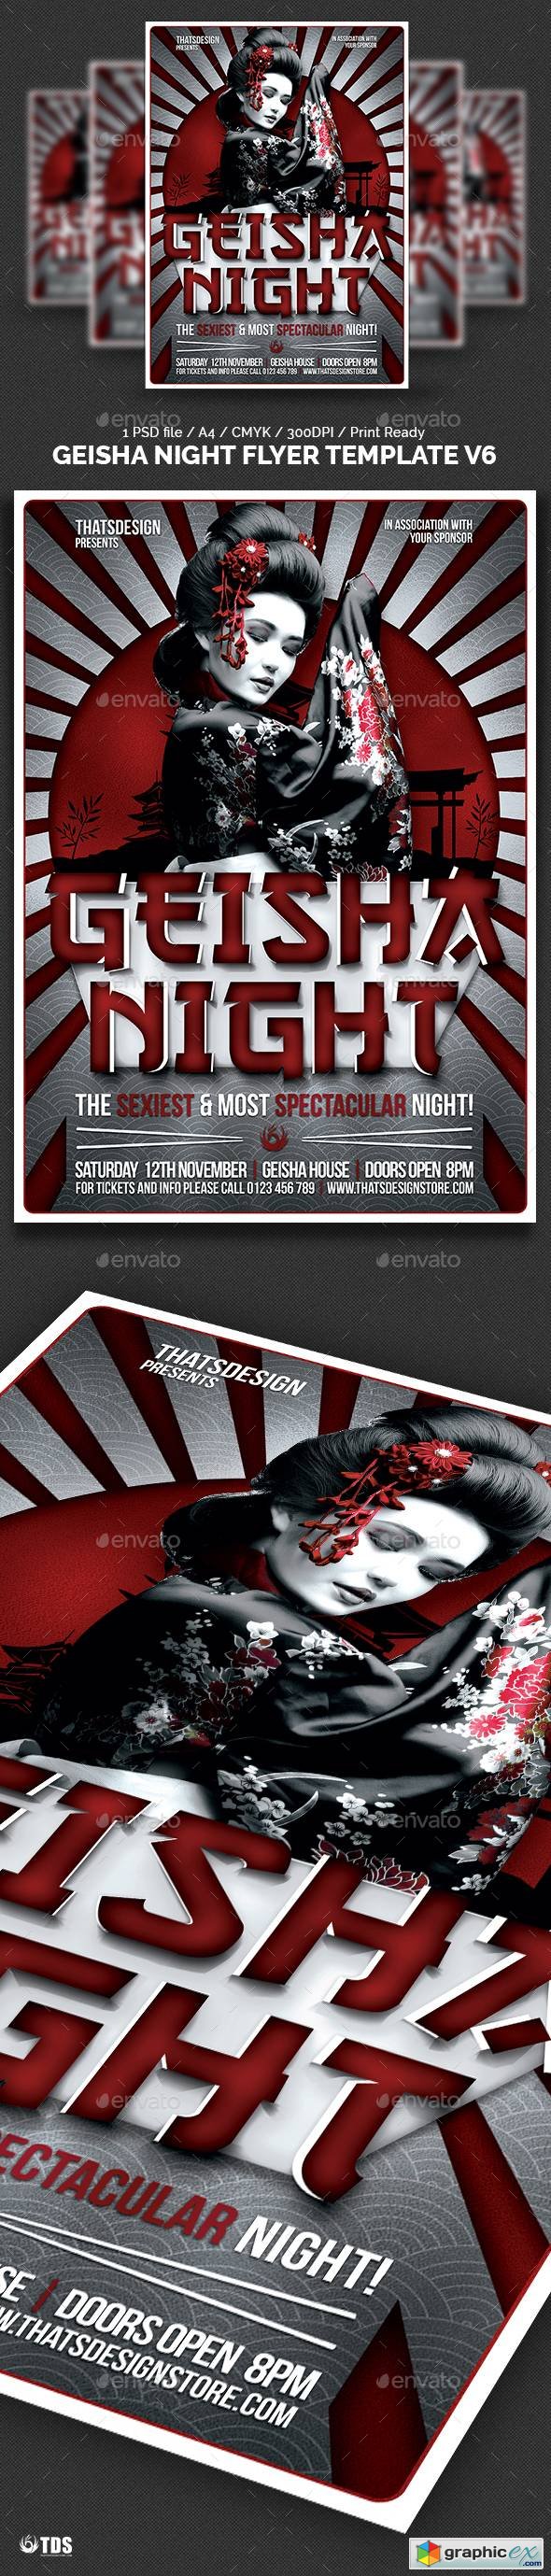 Geisha Night Flyer Template V6